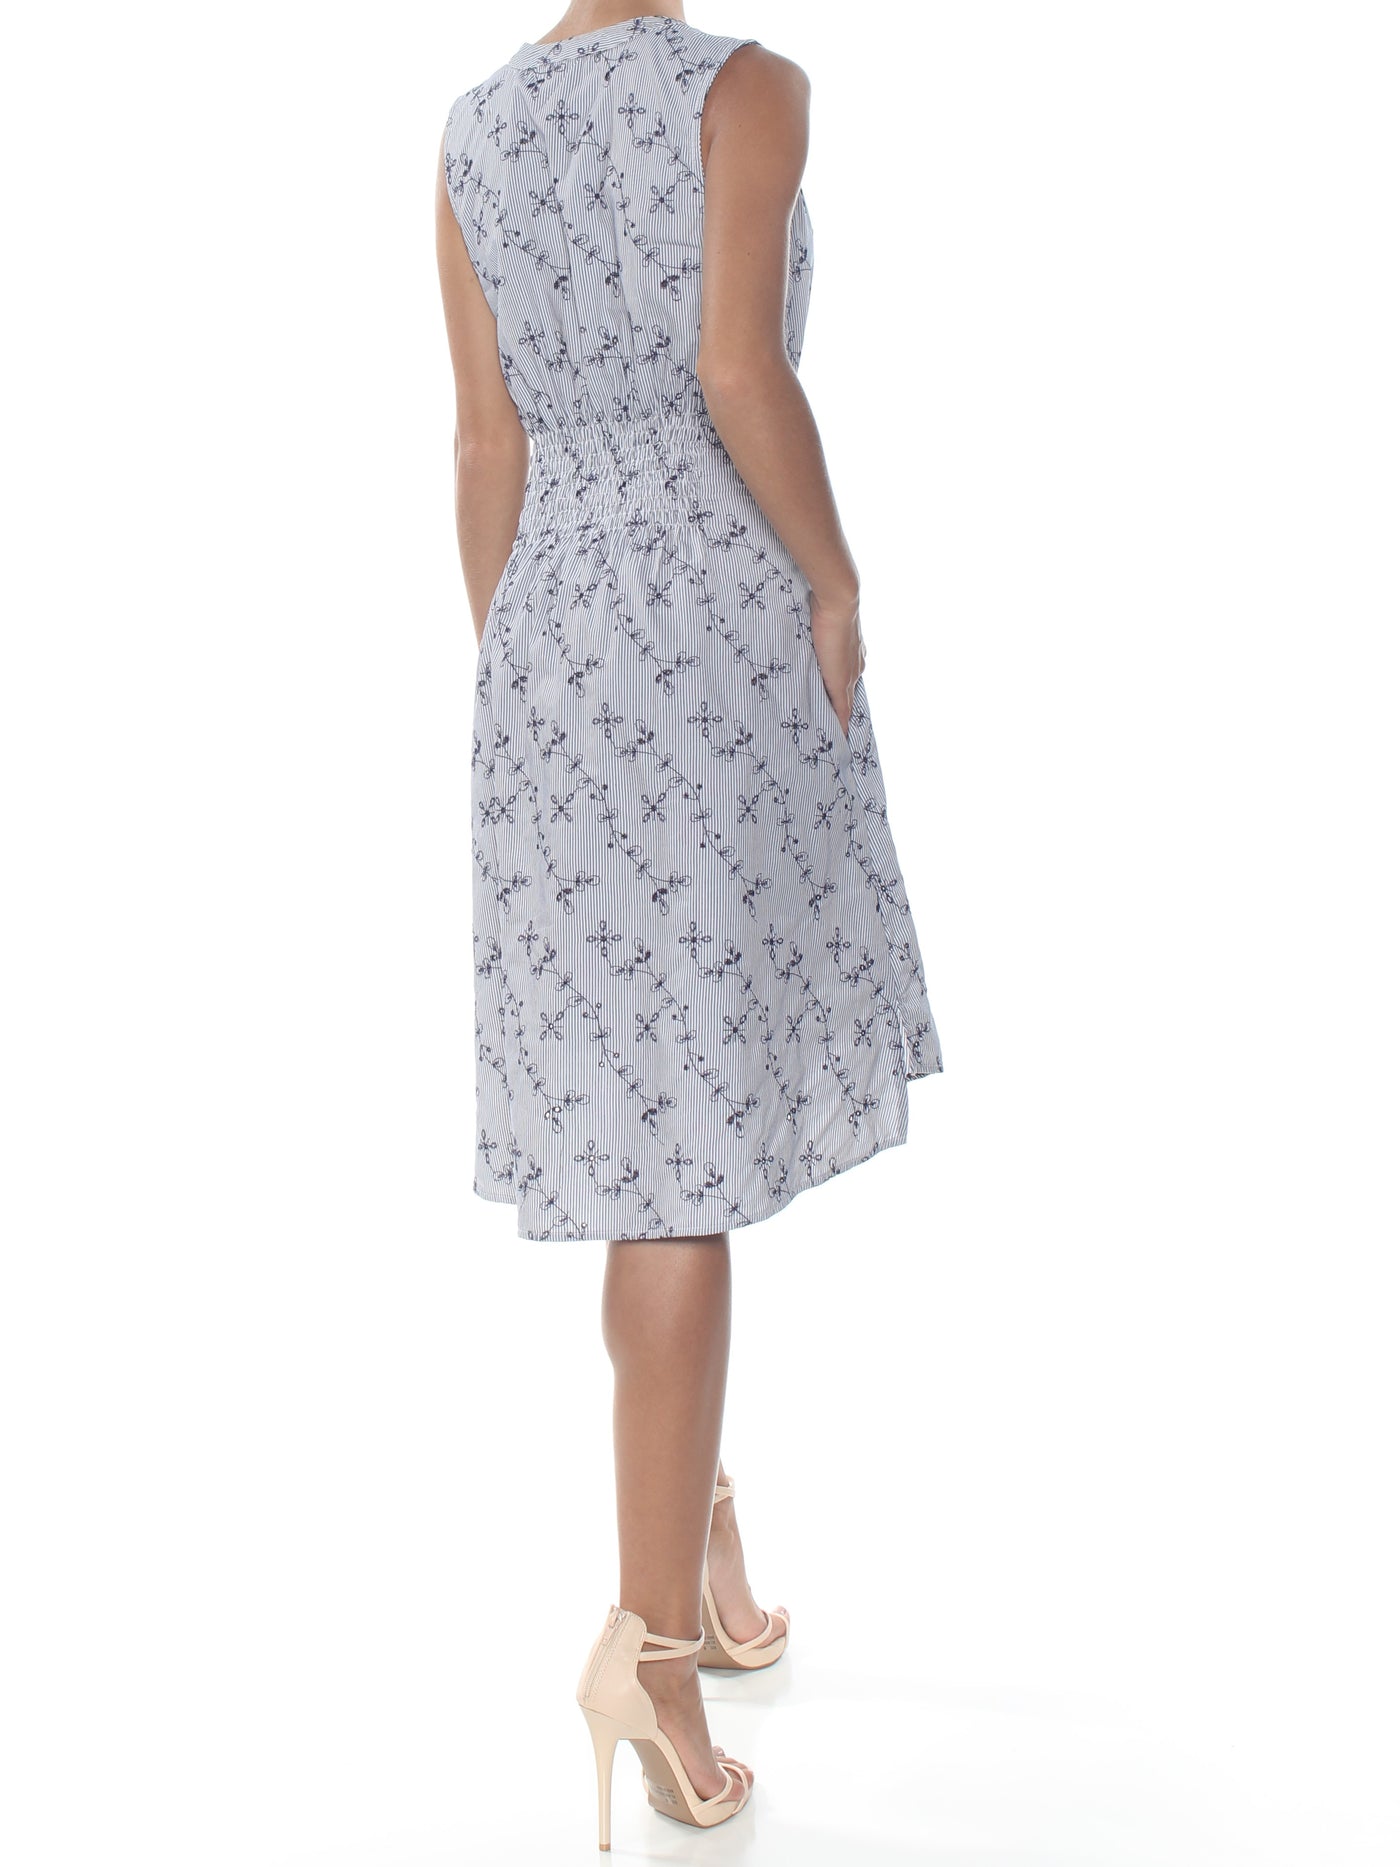 WILLIAM RAST Womens Blue Embroidered Pinstripe Sleeveless Knee Length Dress